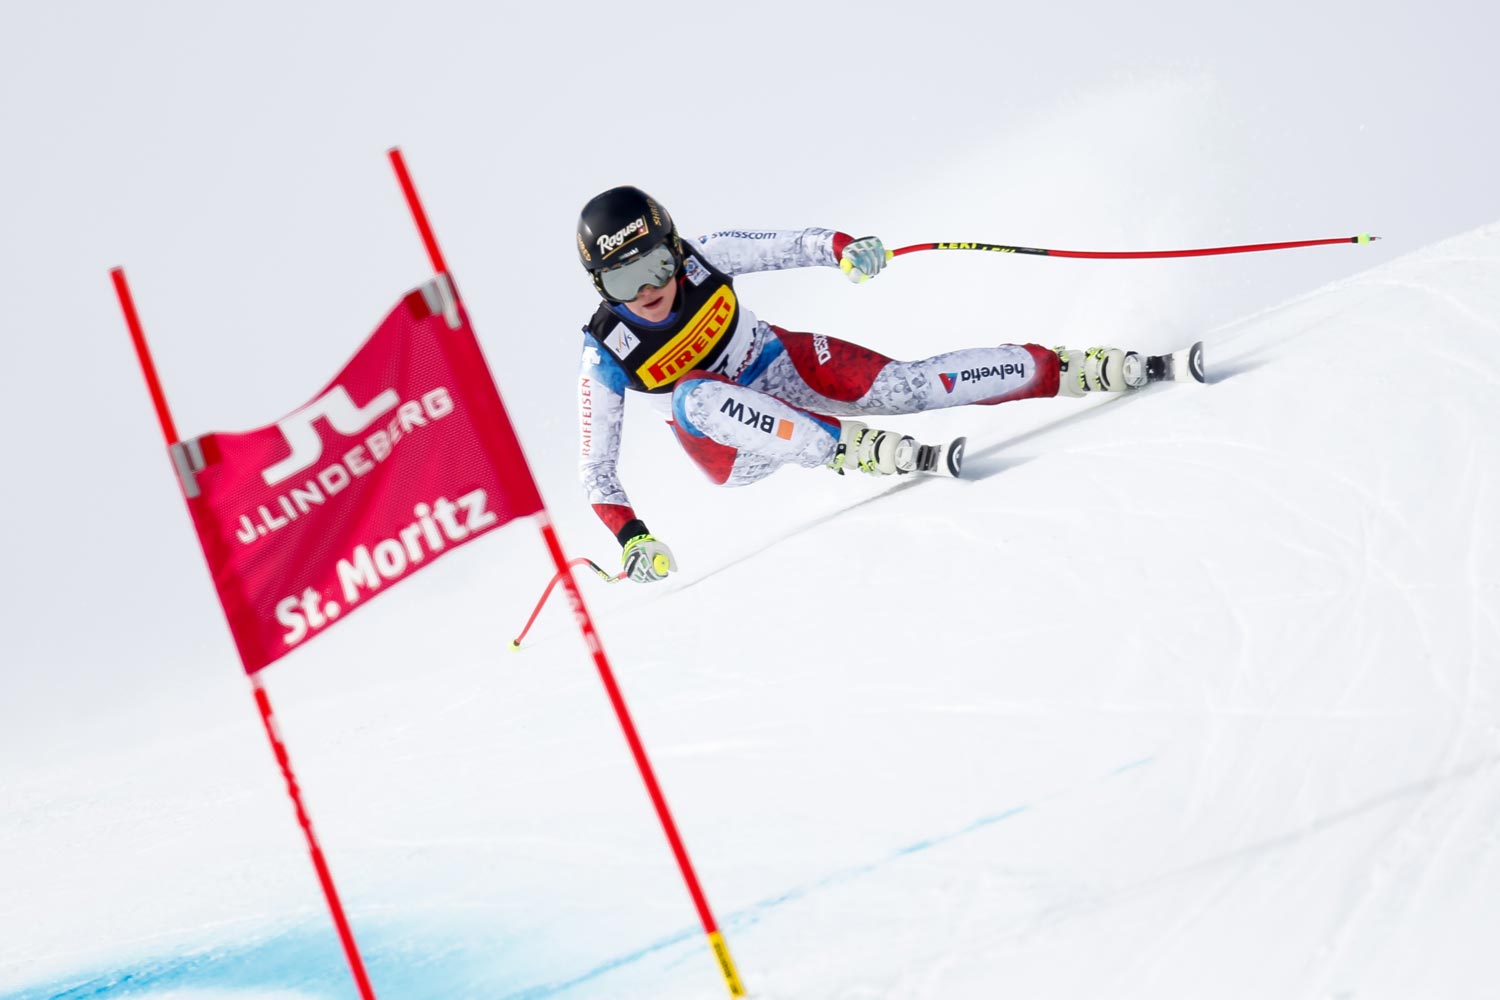 Championnats du monde de ski alpin 2017 St. Moritz, Super G femmes, Lara Gut